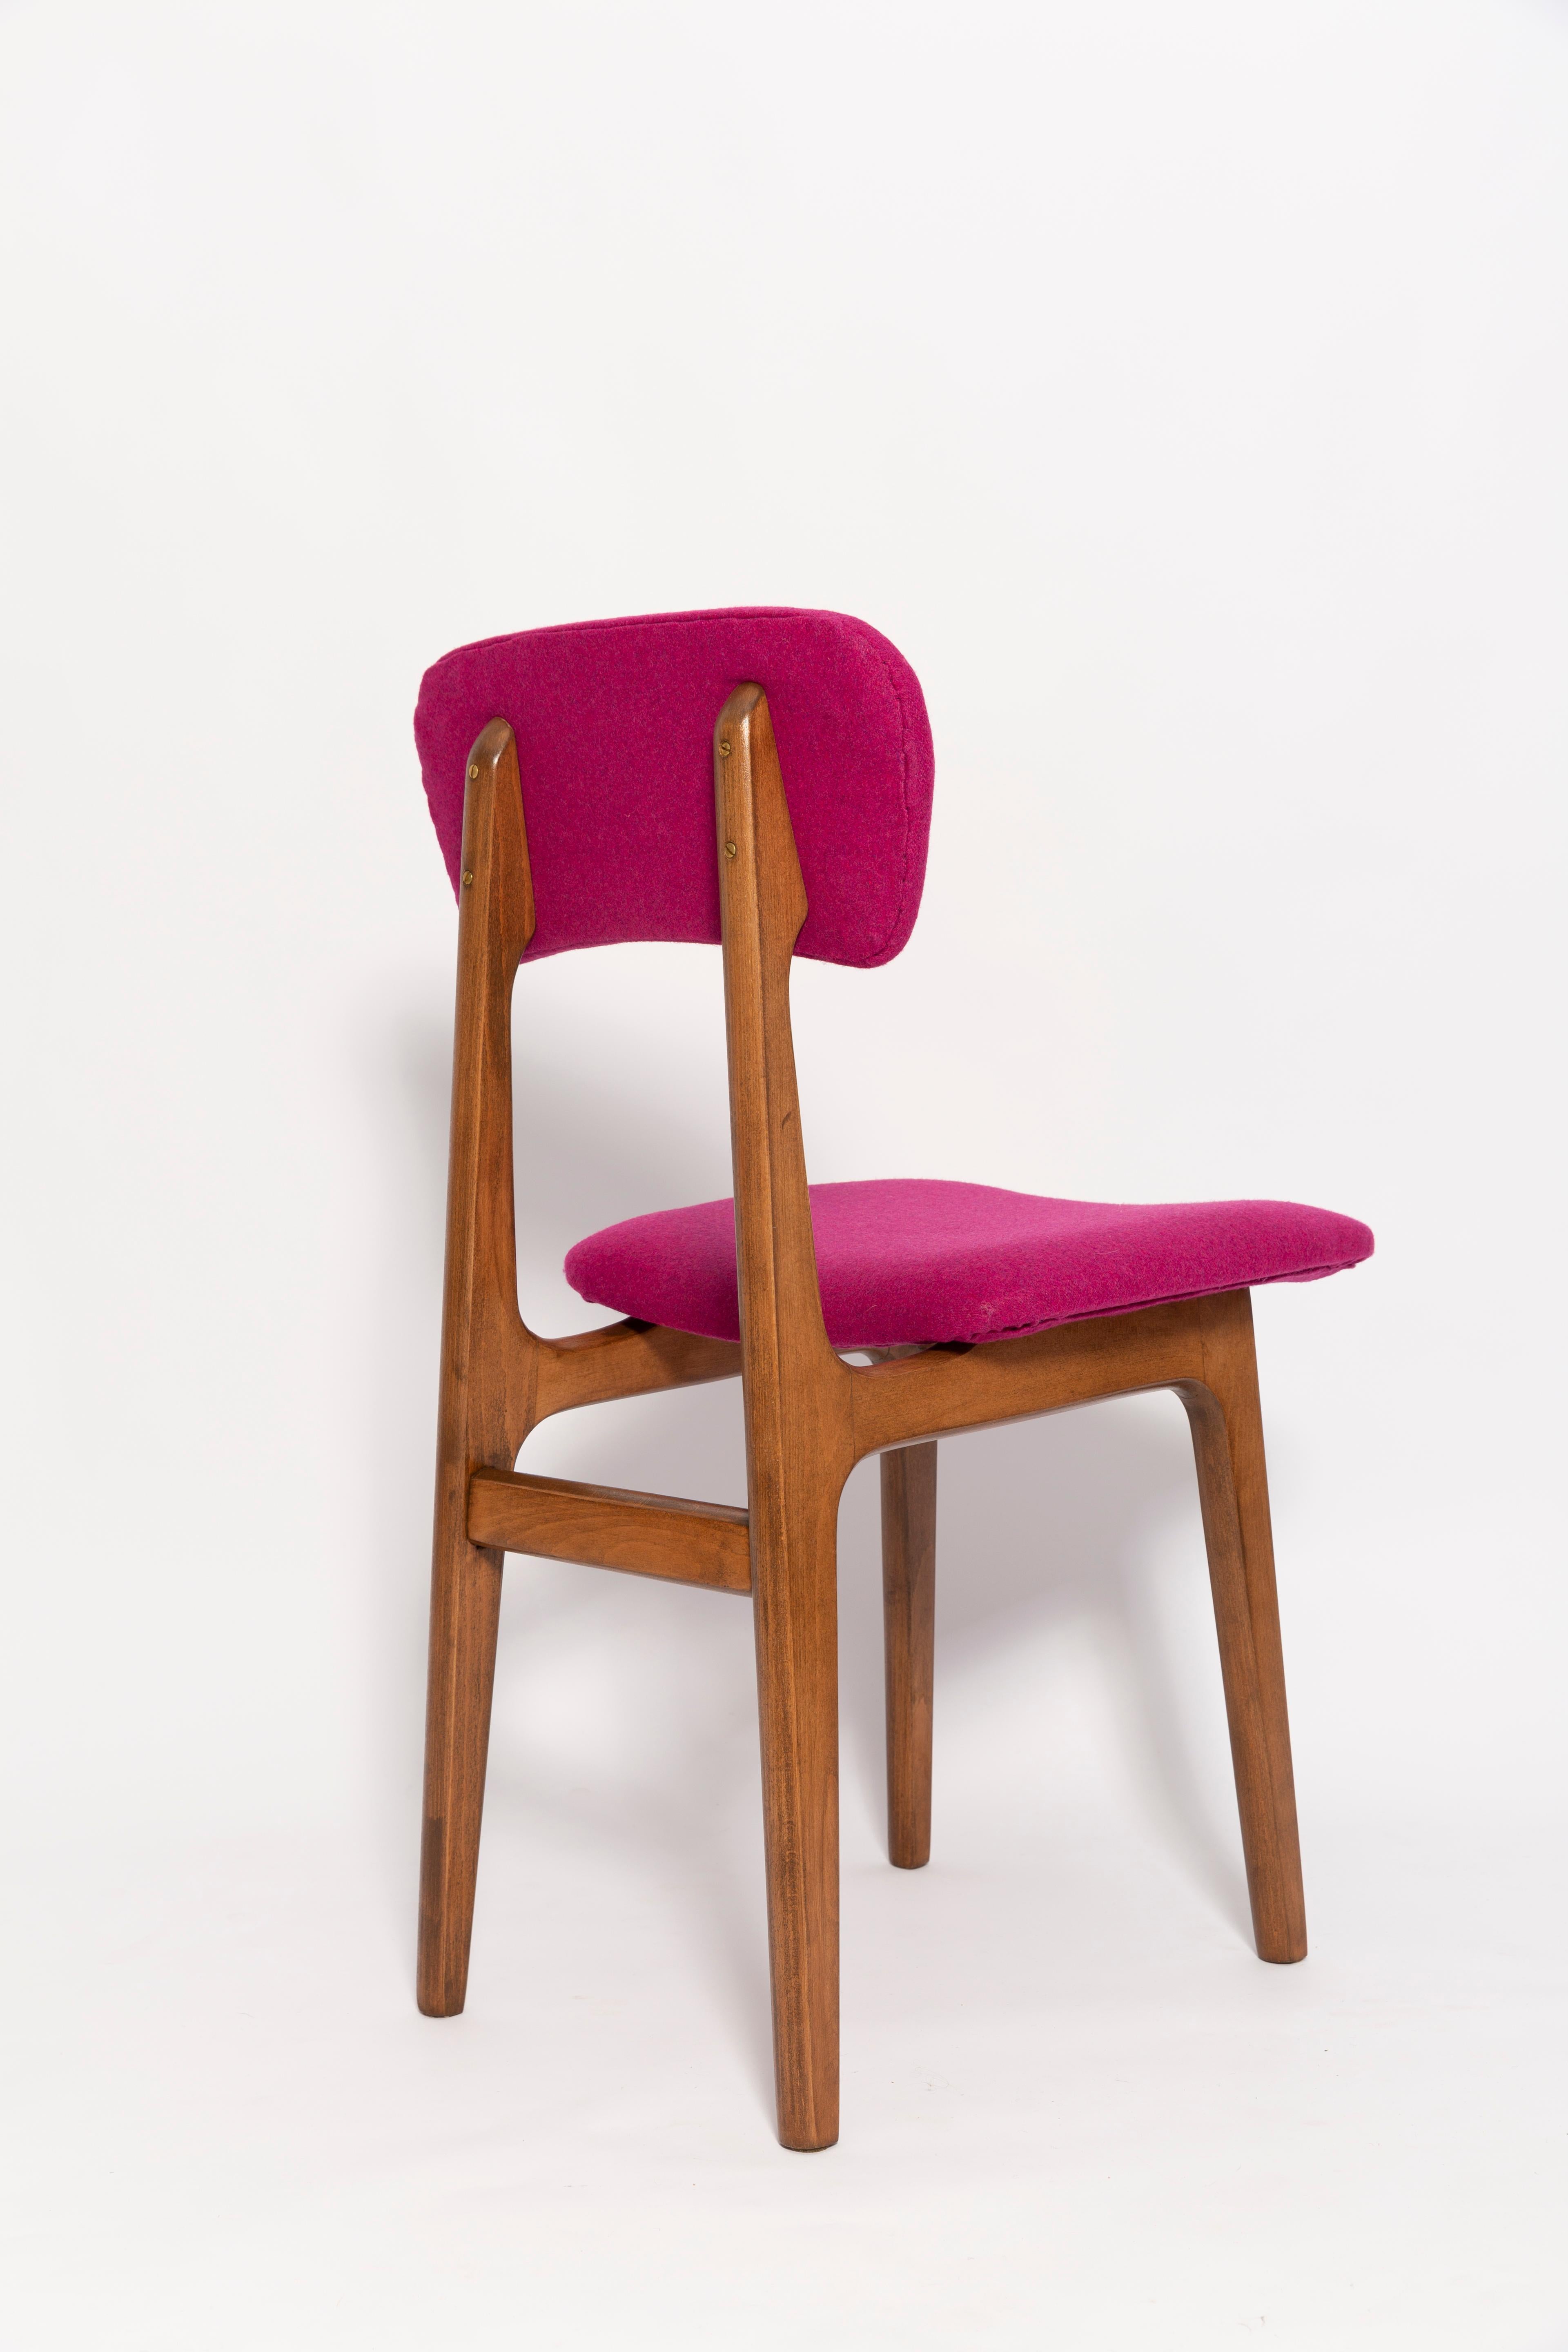 20th Century Set of Six Mid Century Fuchsia Pink Wool Chairs, Rajmund Halas, Europe, 1960s For Sale